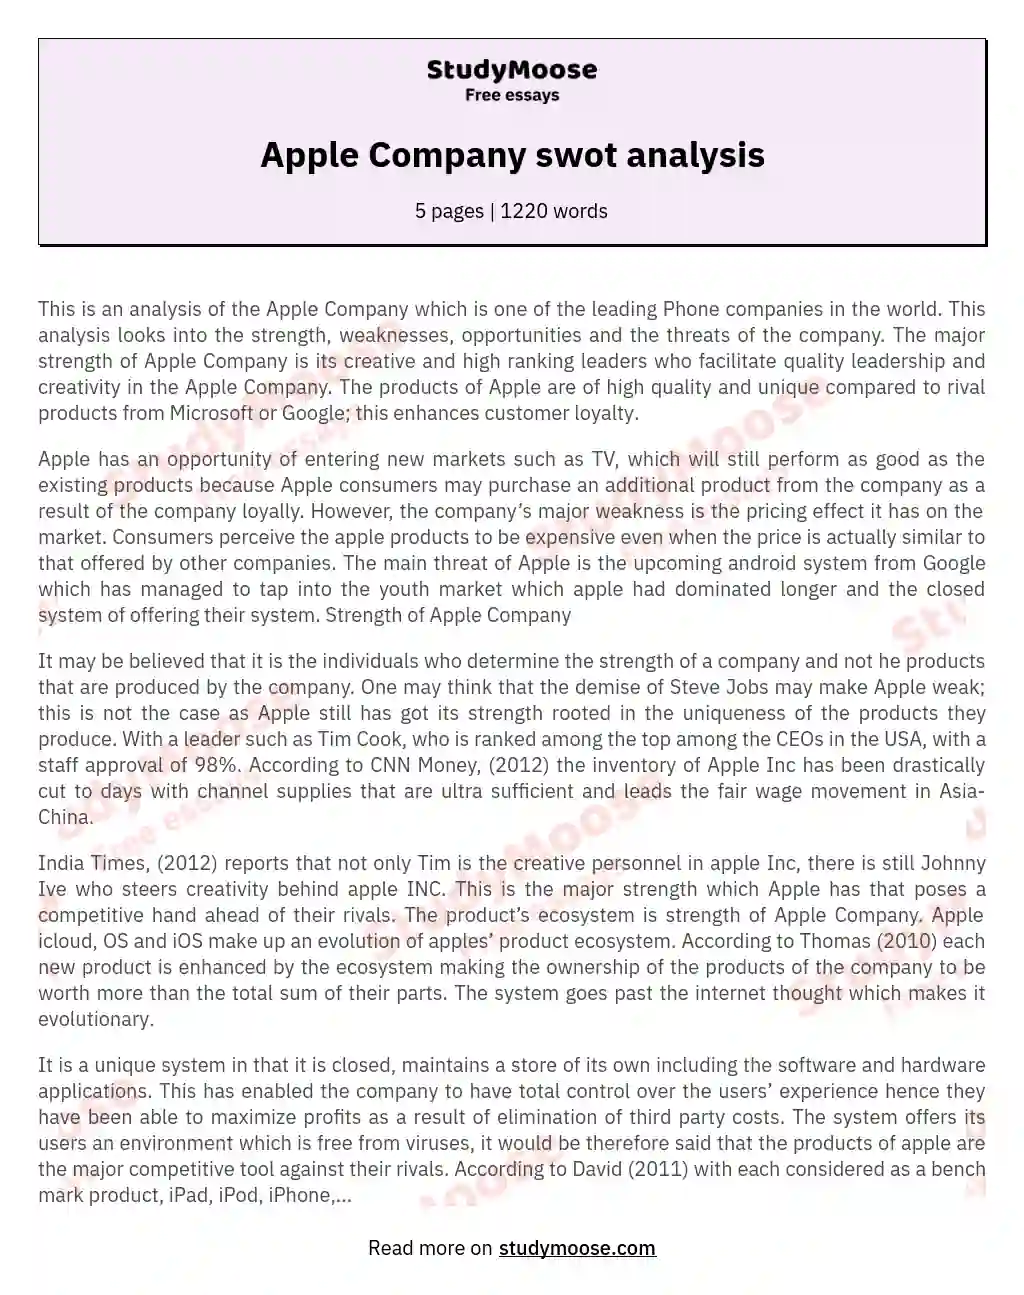 Apple Inc.: Strategic Analysis and Market Resilience essay